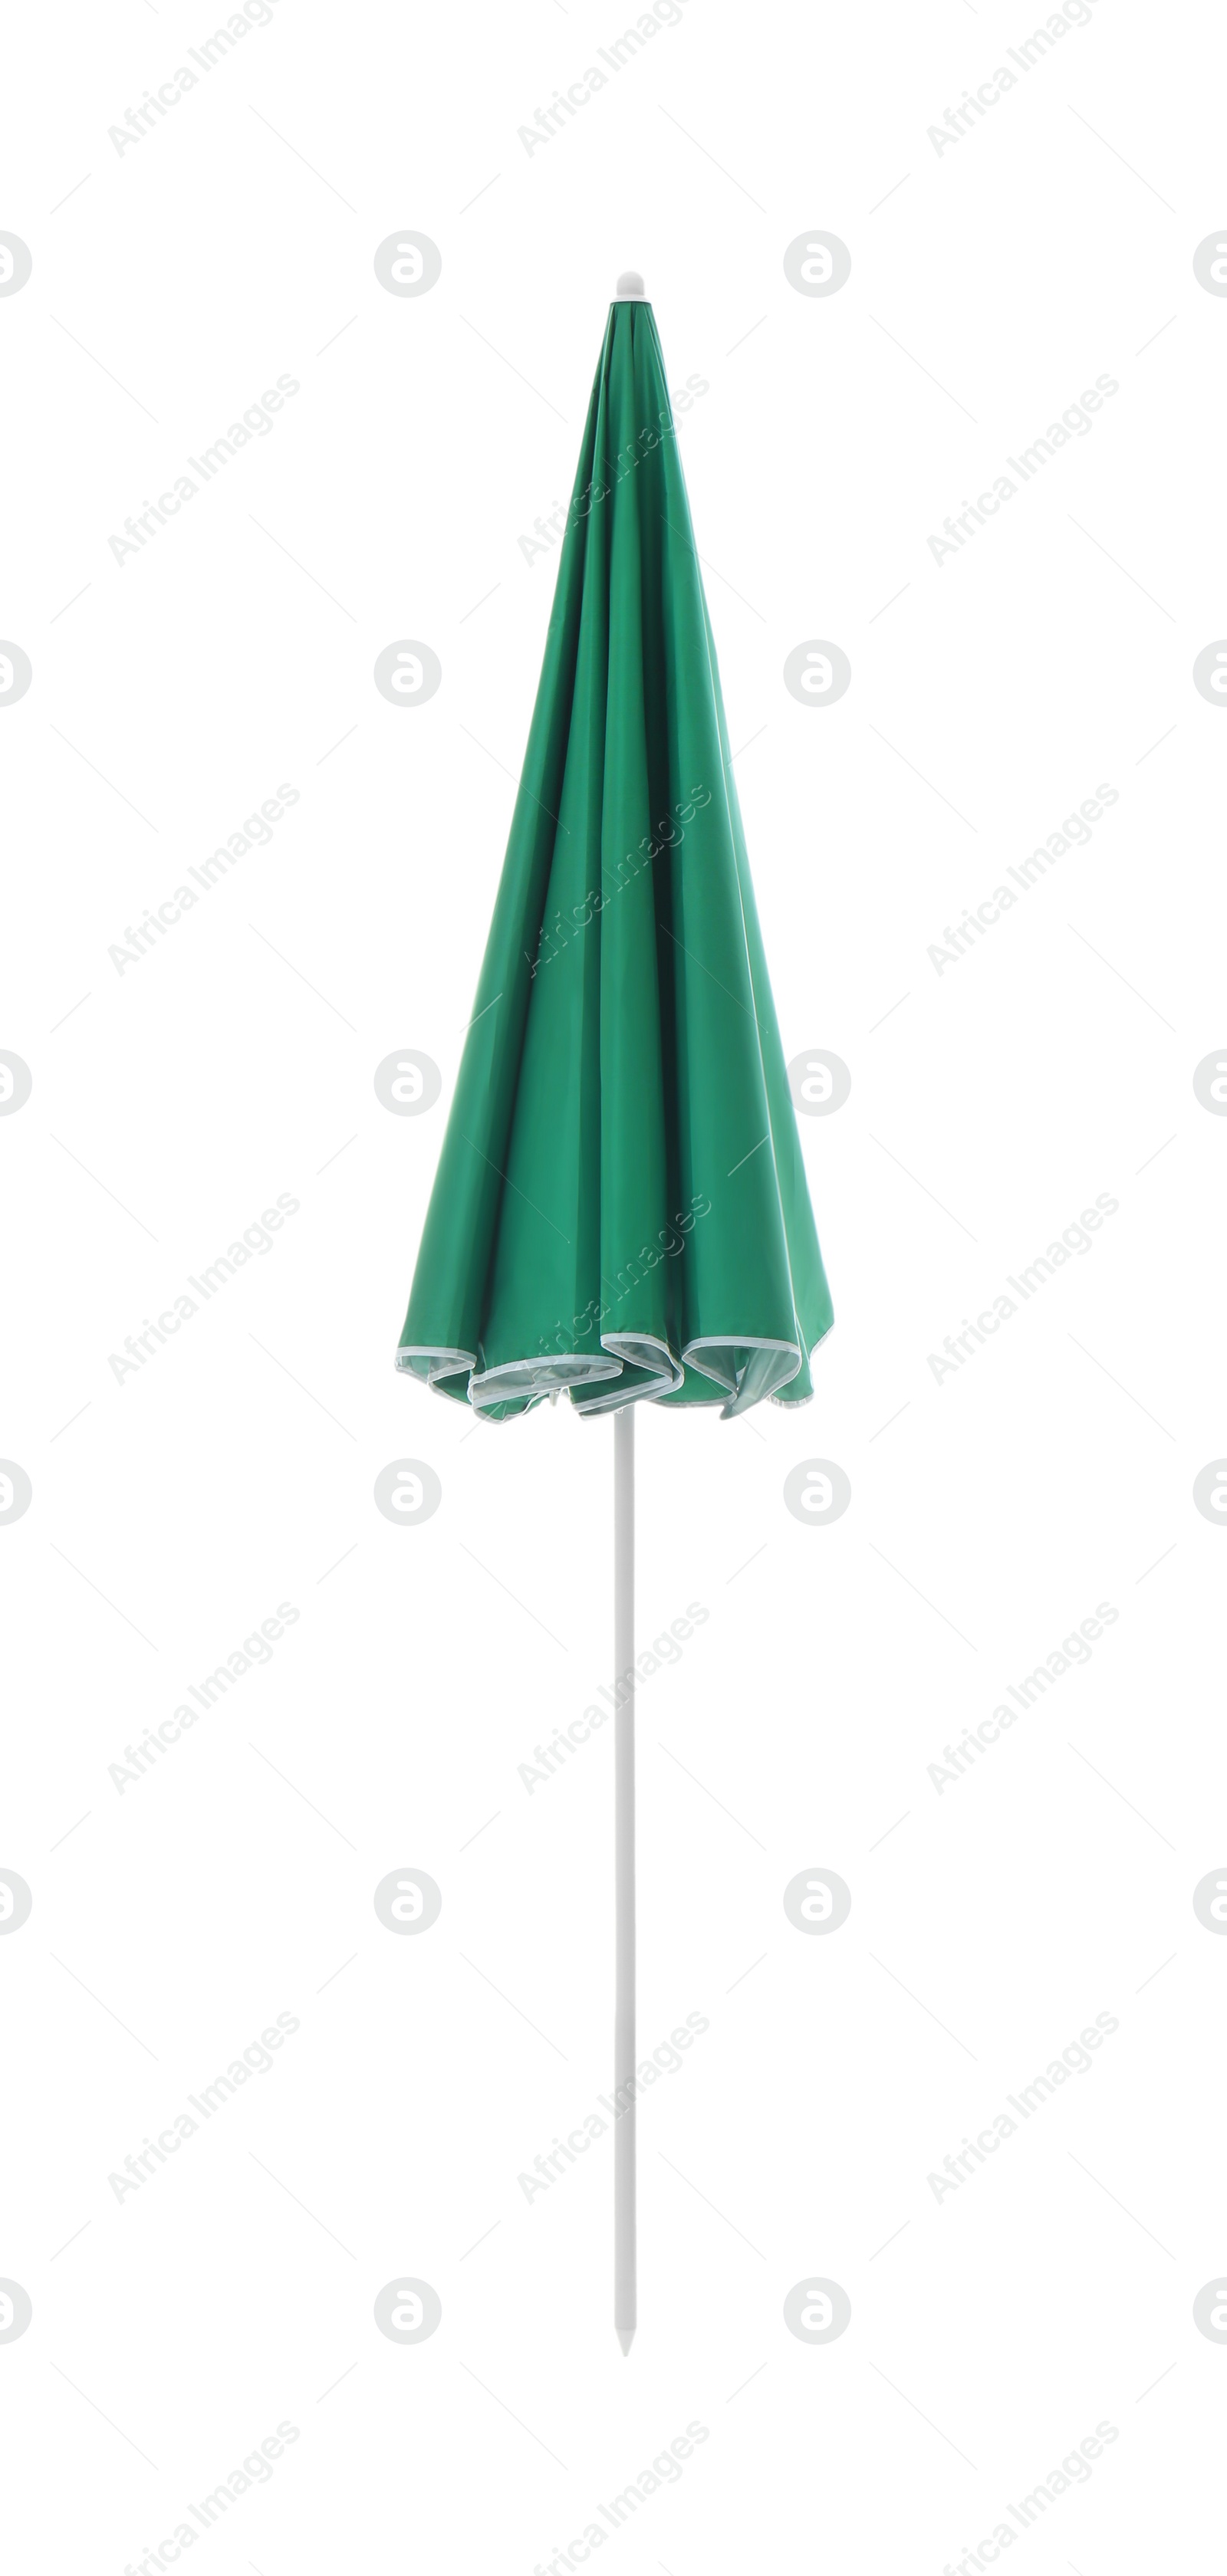 Photo of Closed green beach umbrella isolated on white